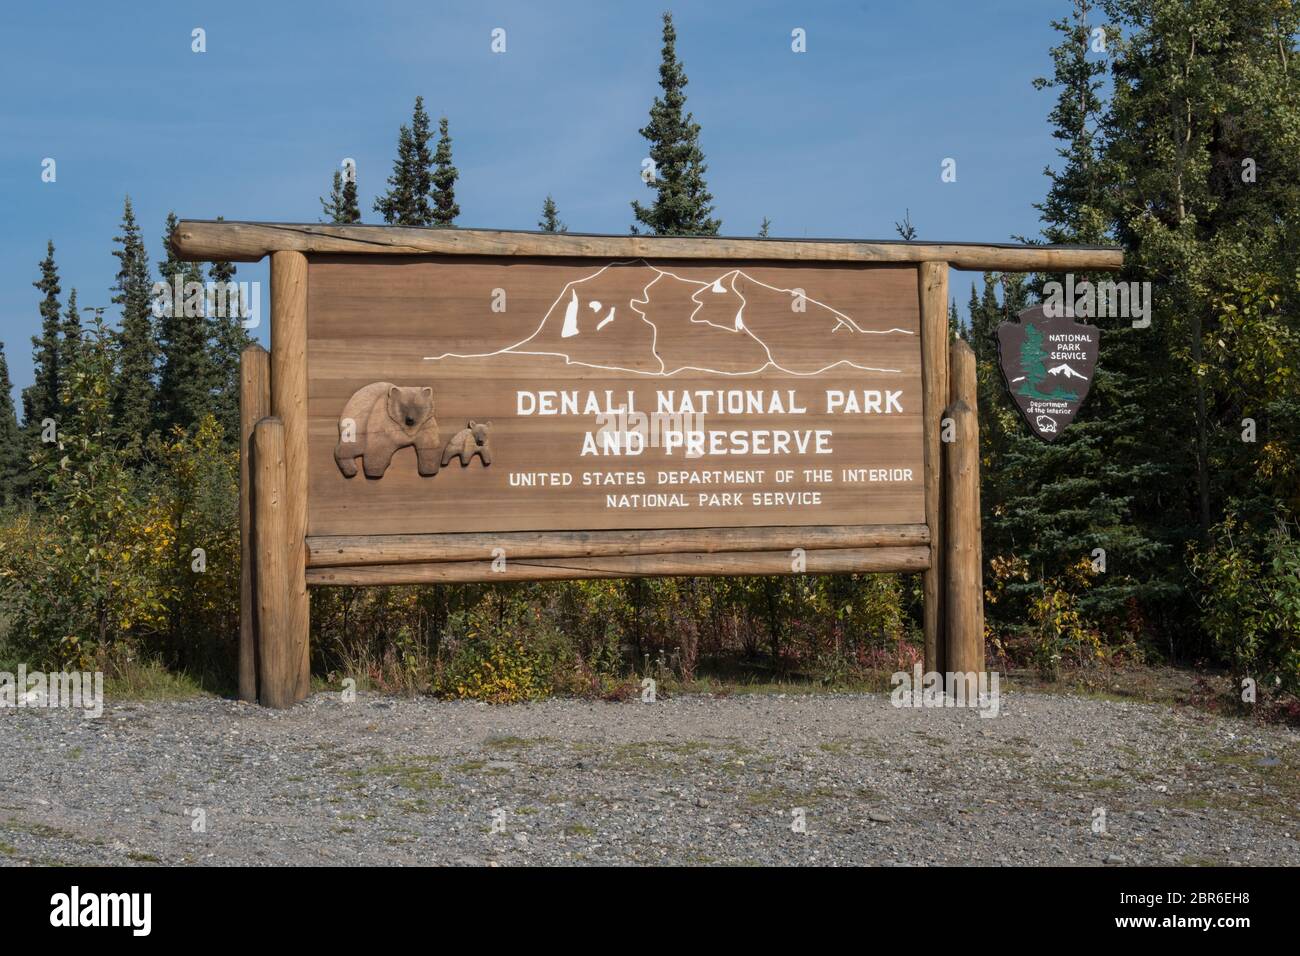 Denali National Park sign showing grizzly bear and cub, Alaska, USA Stock Photo